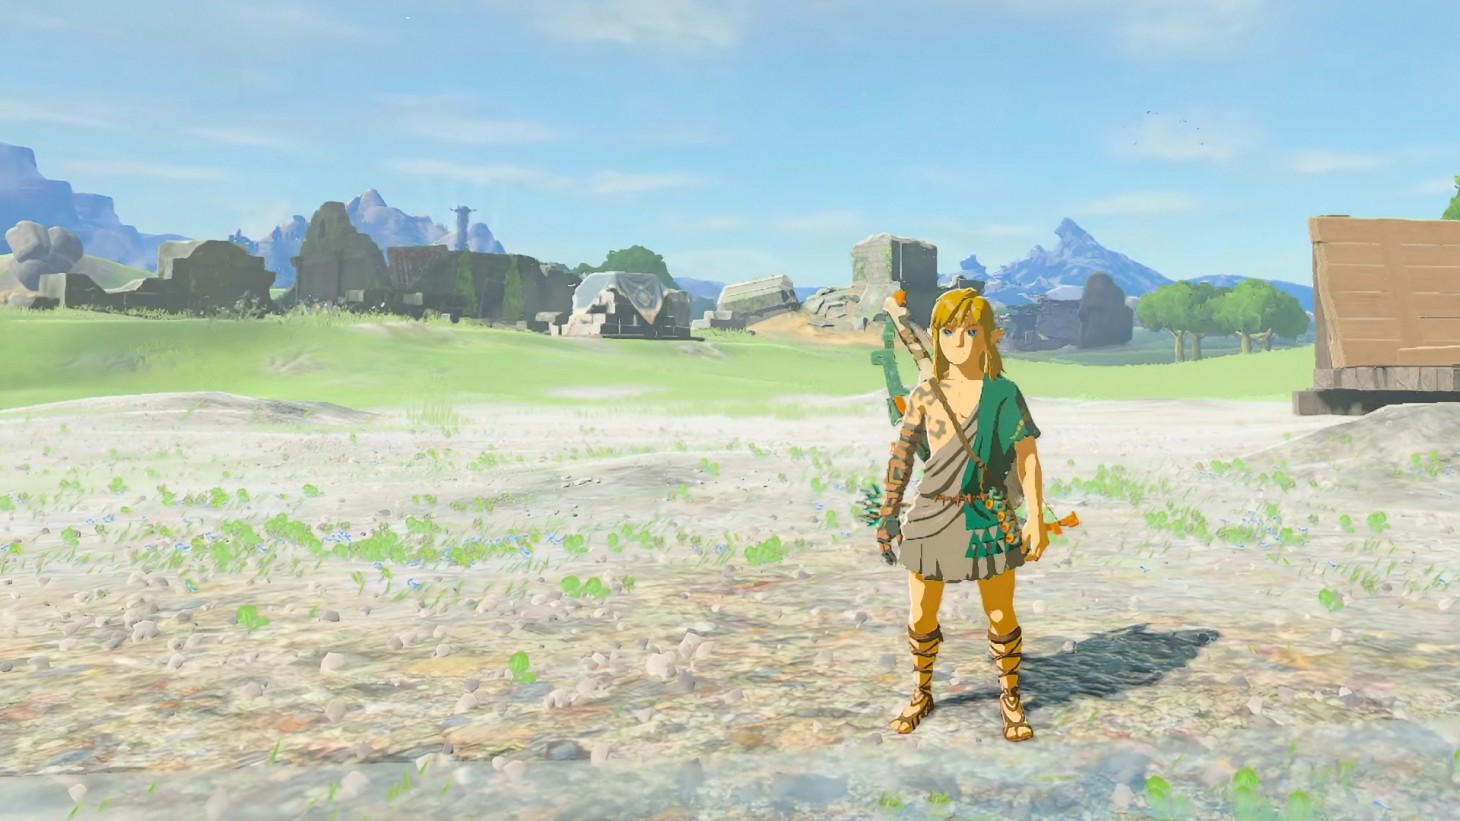 NEW Nintendo Legend of Zelda Series: Tears of the Kingdom - Link